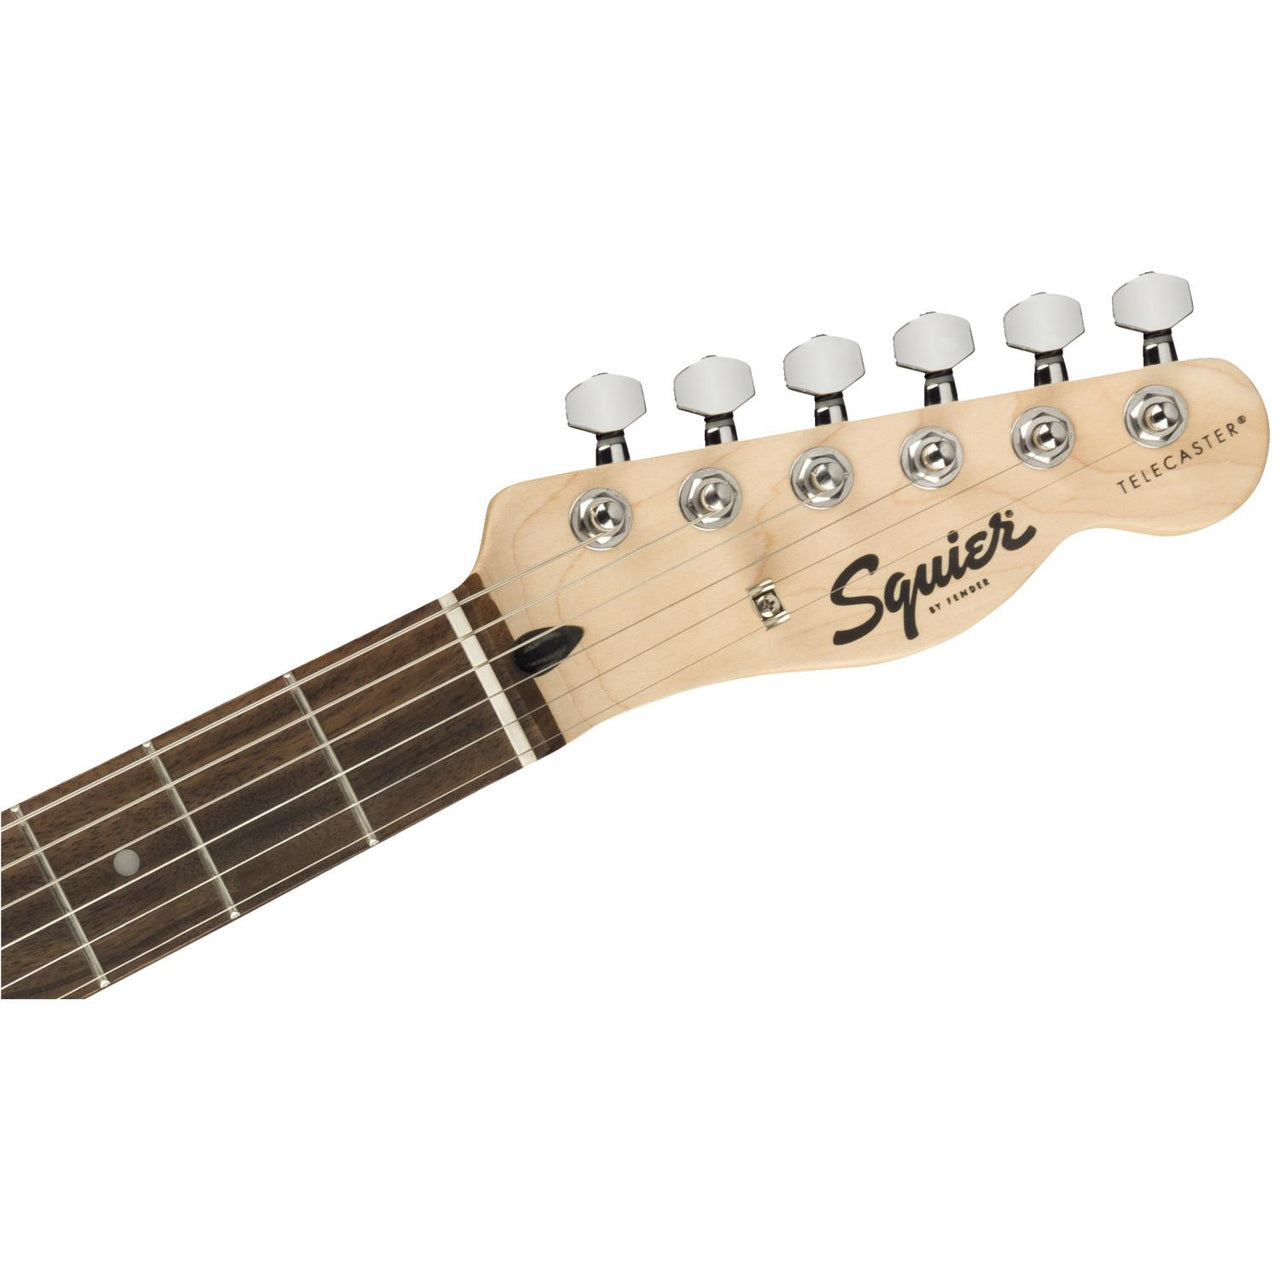 Guitarra Electrica Fender Squier Bullet Telecaster Blk 0370045506